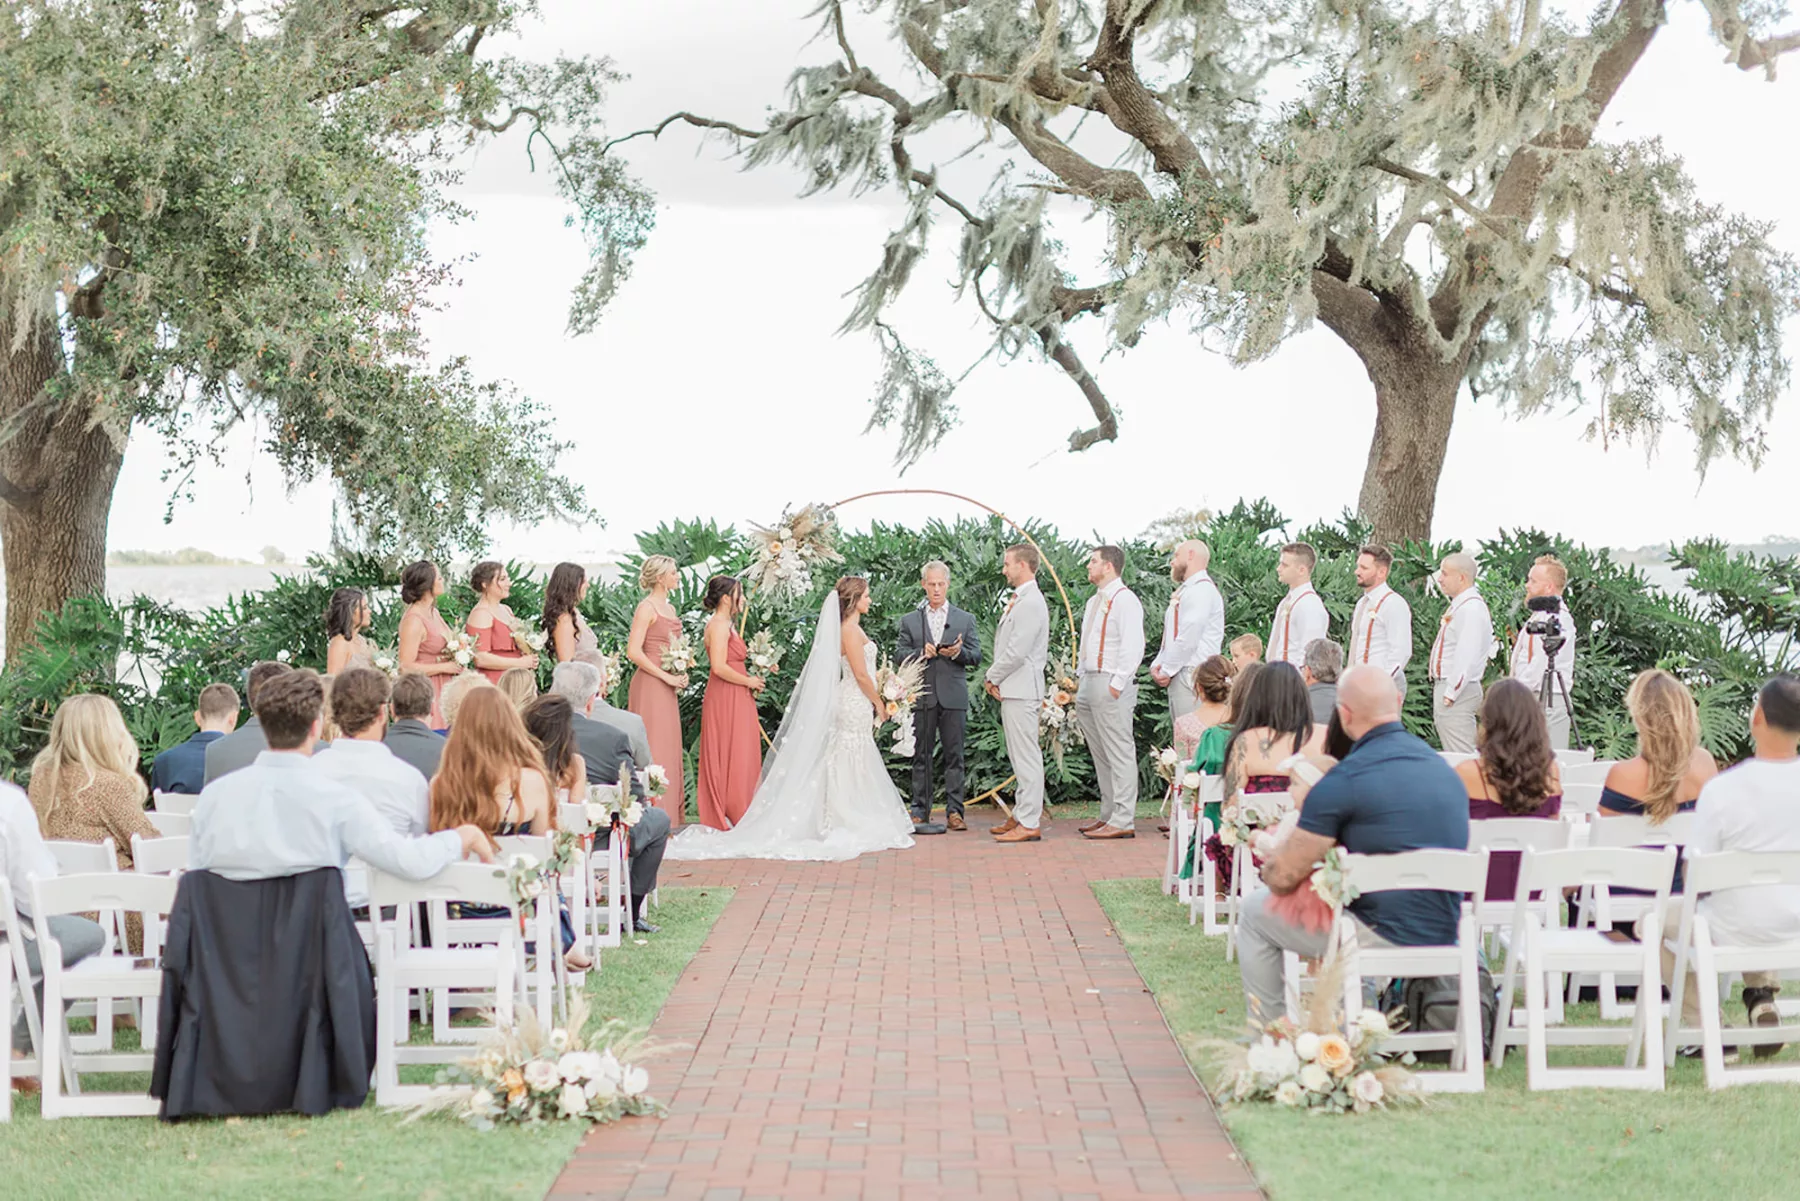 Outdoor Boho Intimate Wedding Garden Ceremony Inspiration | Tampa Bay Planner B Eventful